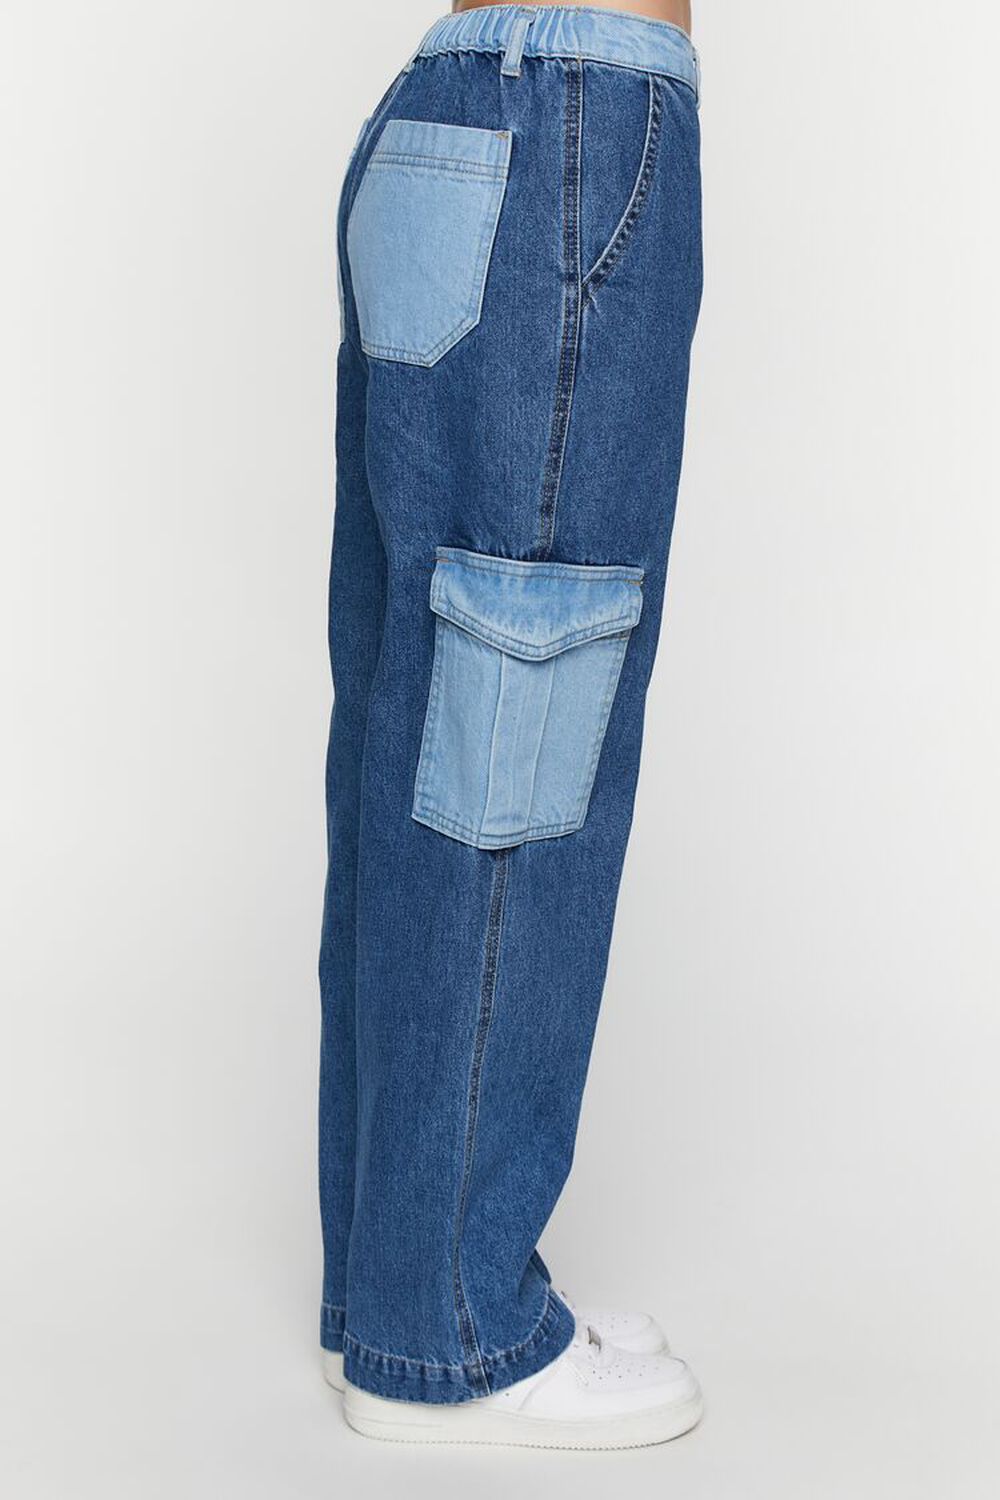 MEDIUM DENIM/DENIM Reworked Straight-Leg Cargo Jeans, image 2